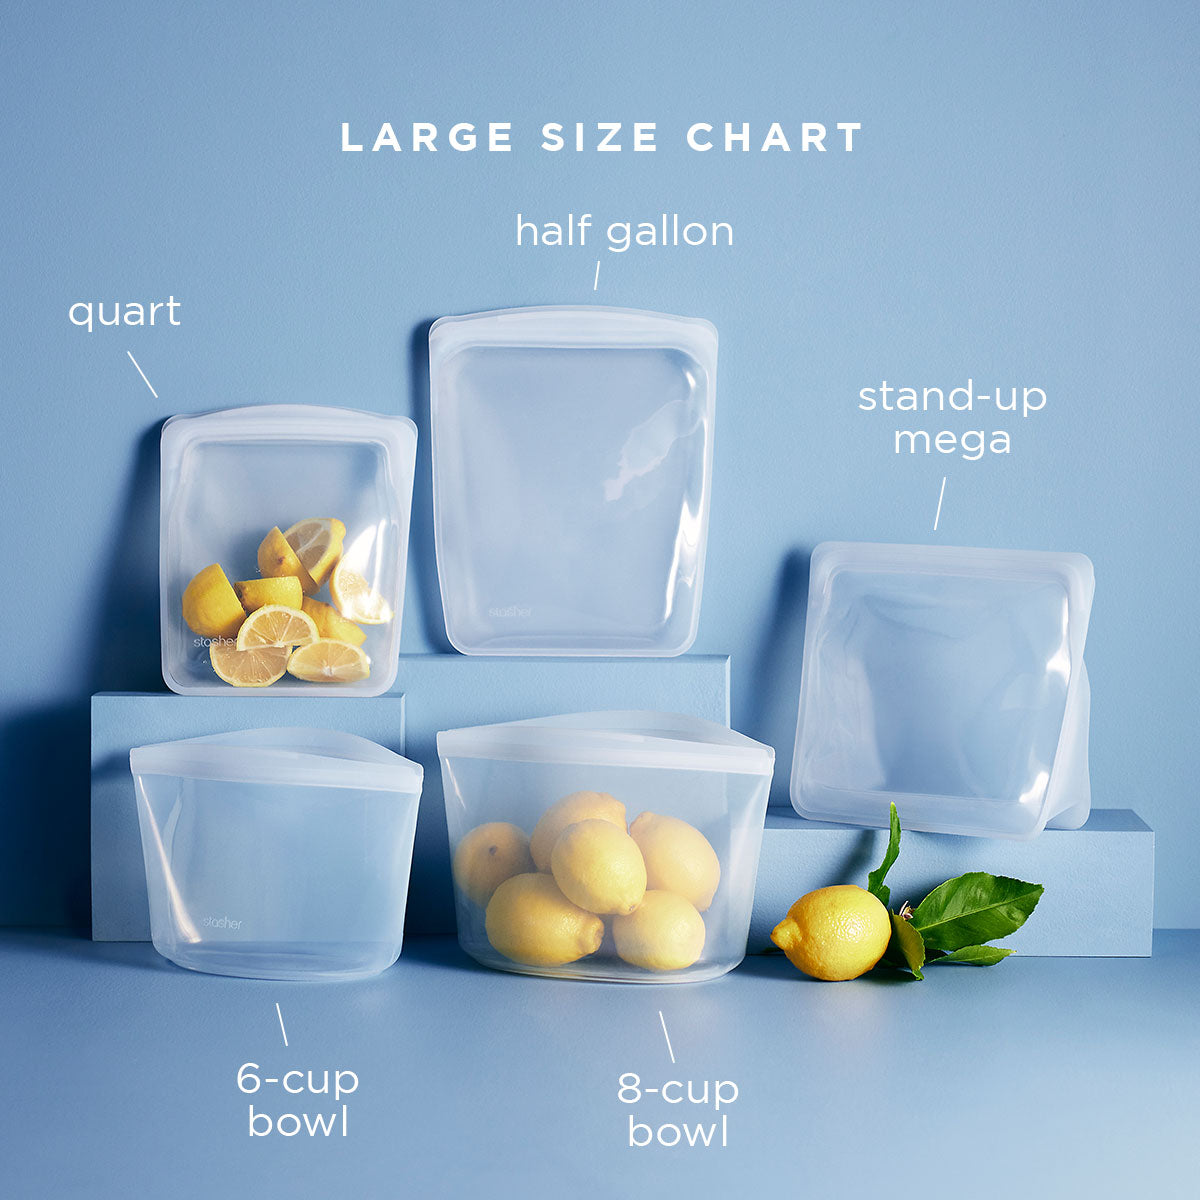 Stand-Up Mega Bag, Food-Grade Stand-Up Pouch Bag Large